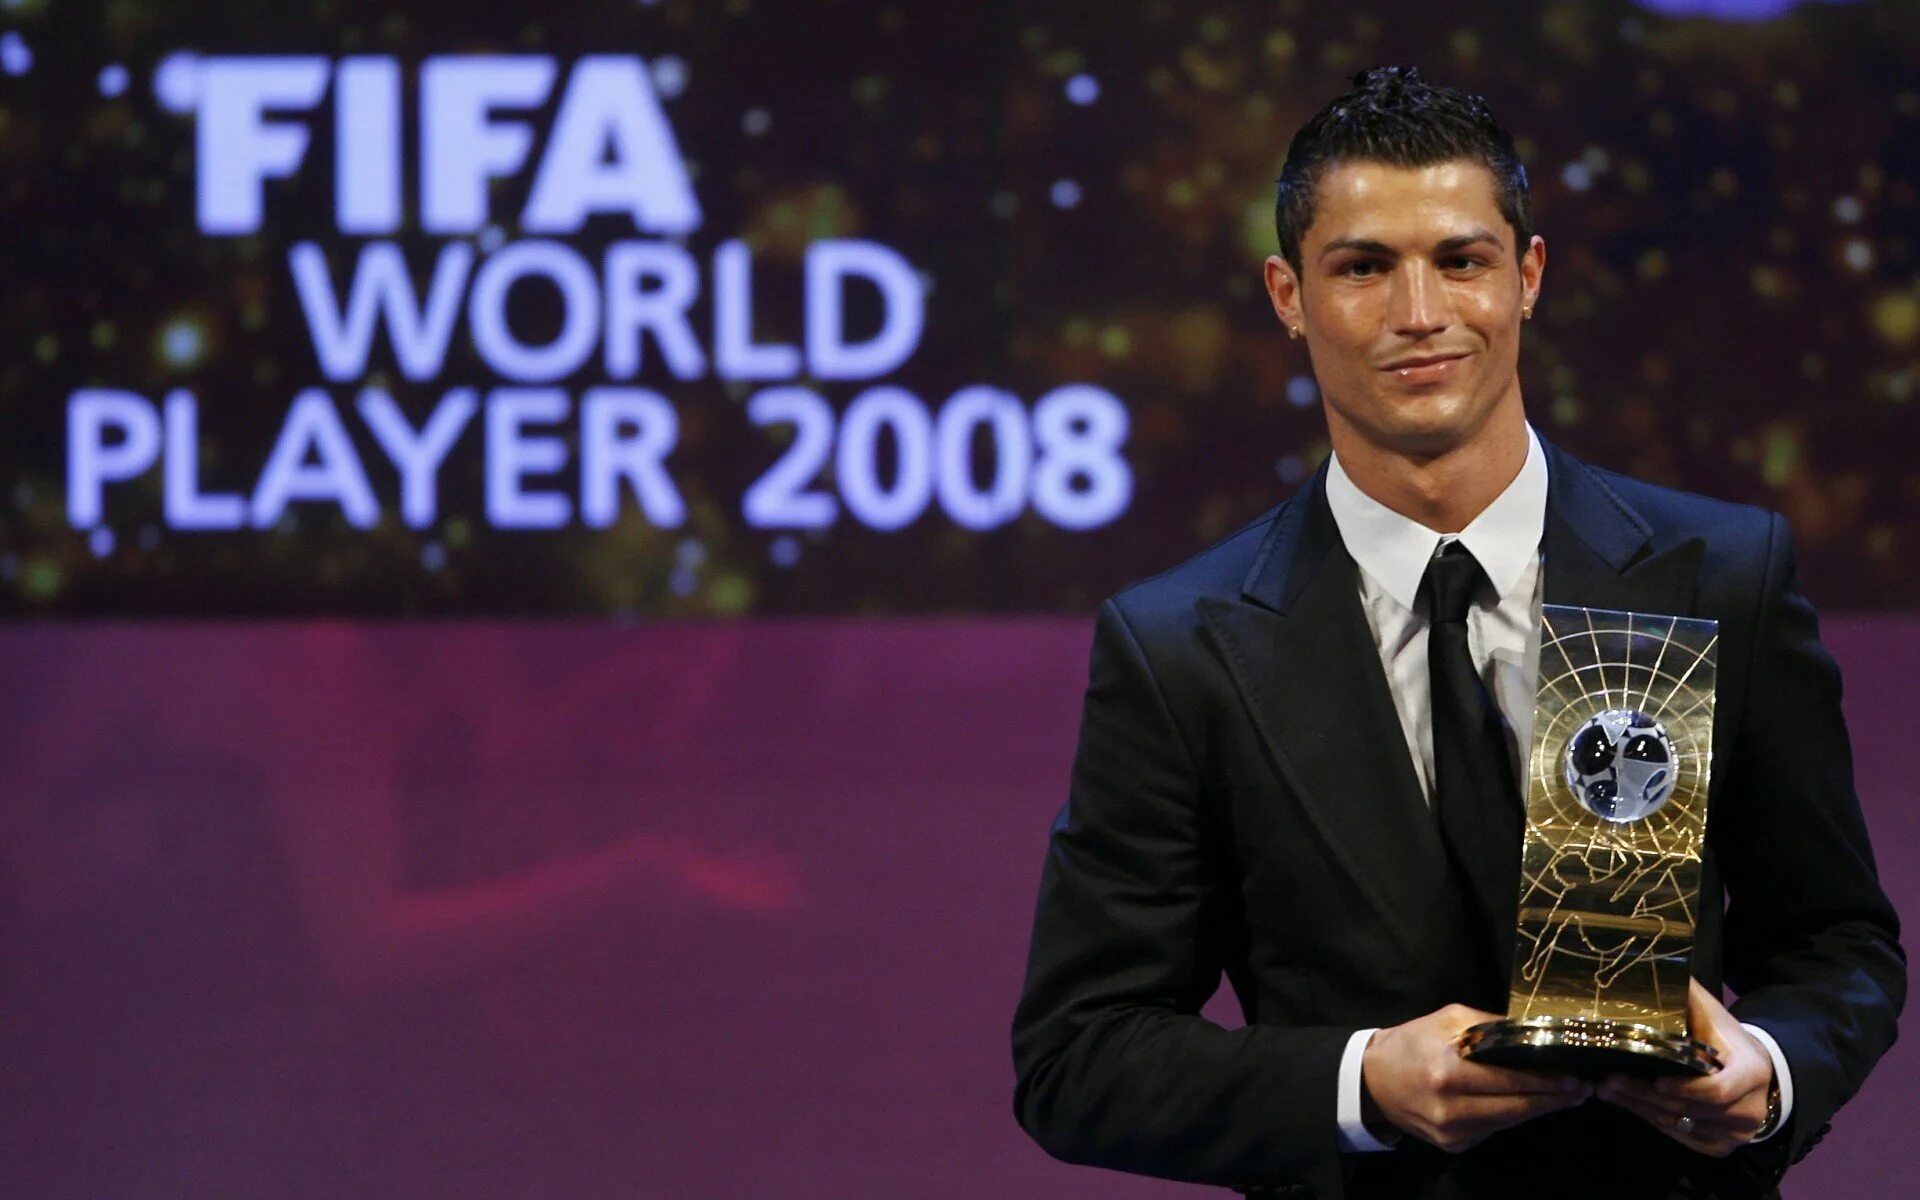 Ronaldo fifa. Награды Роналдо Кристиано Роналдо. Криштиану Роналду 2008. Роналду игрок года 2008. Кристиано Роналдо 2008.